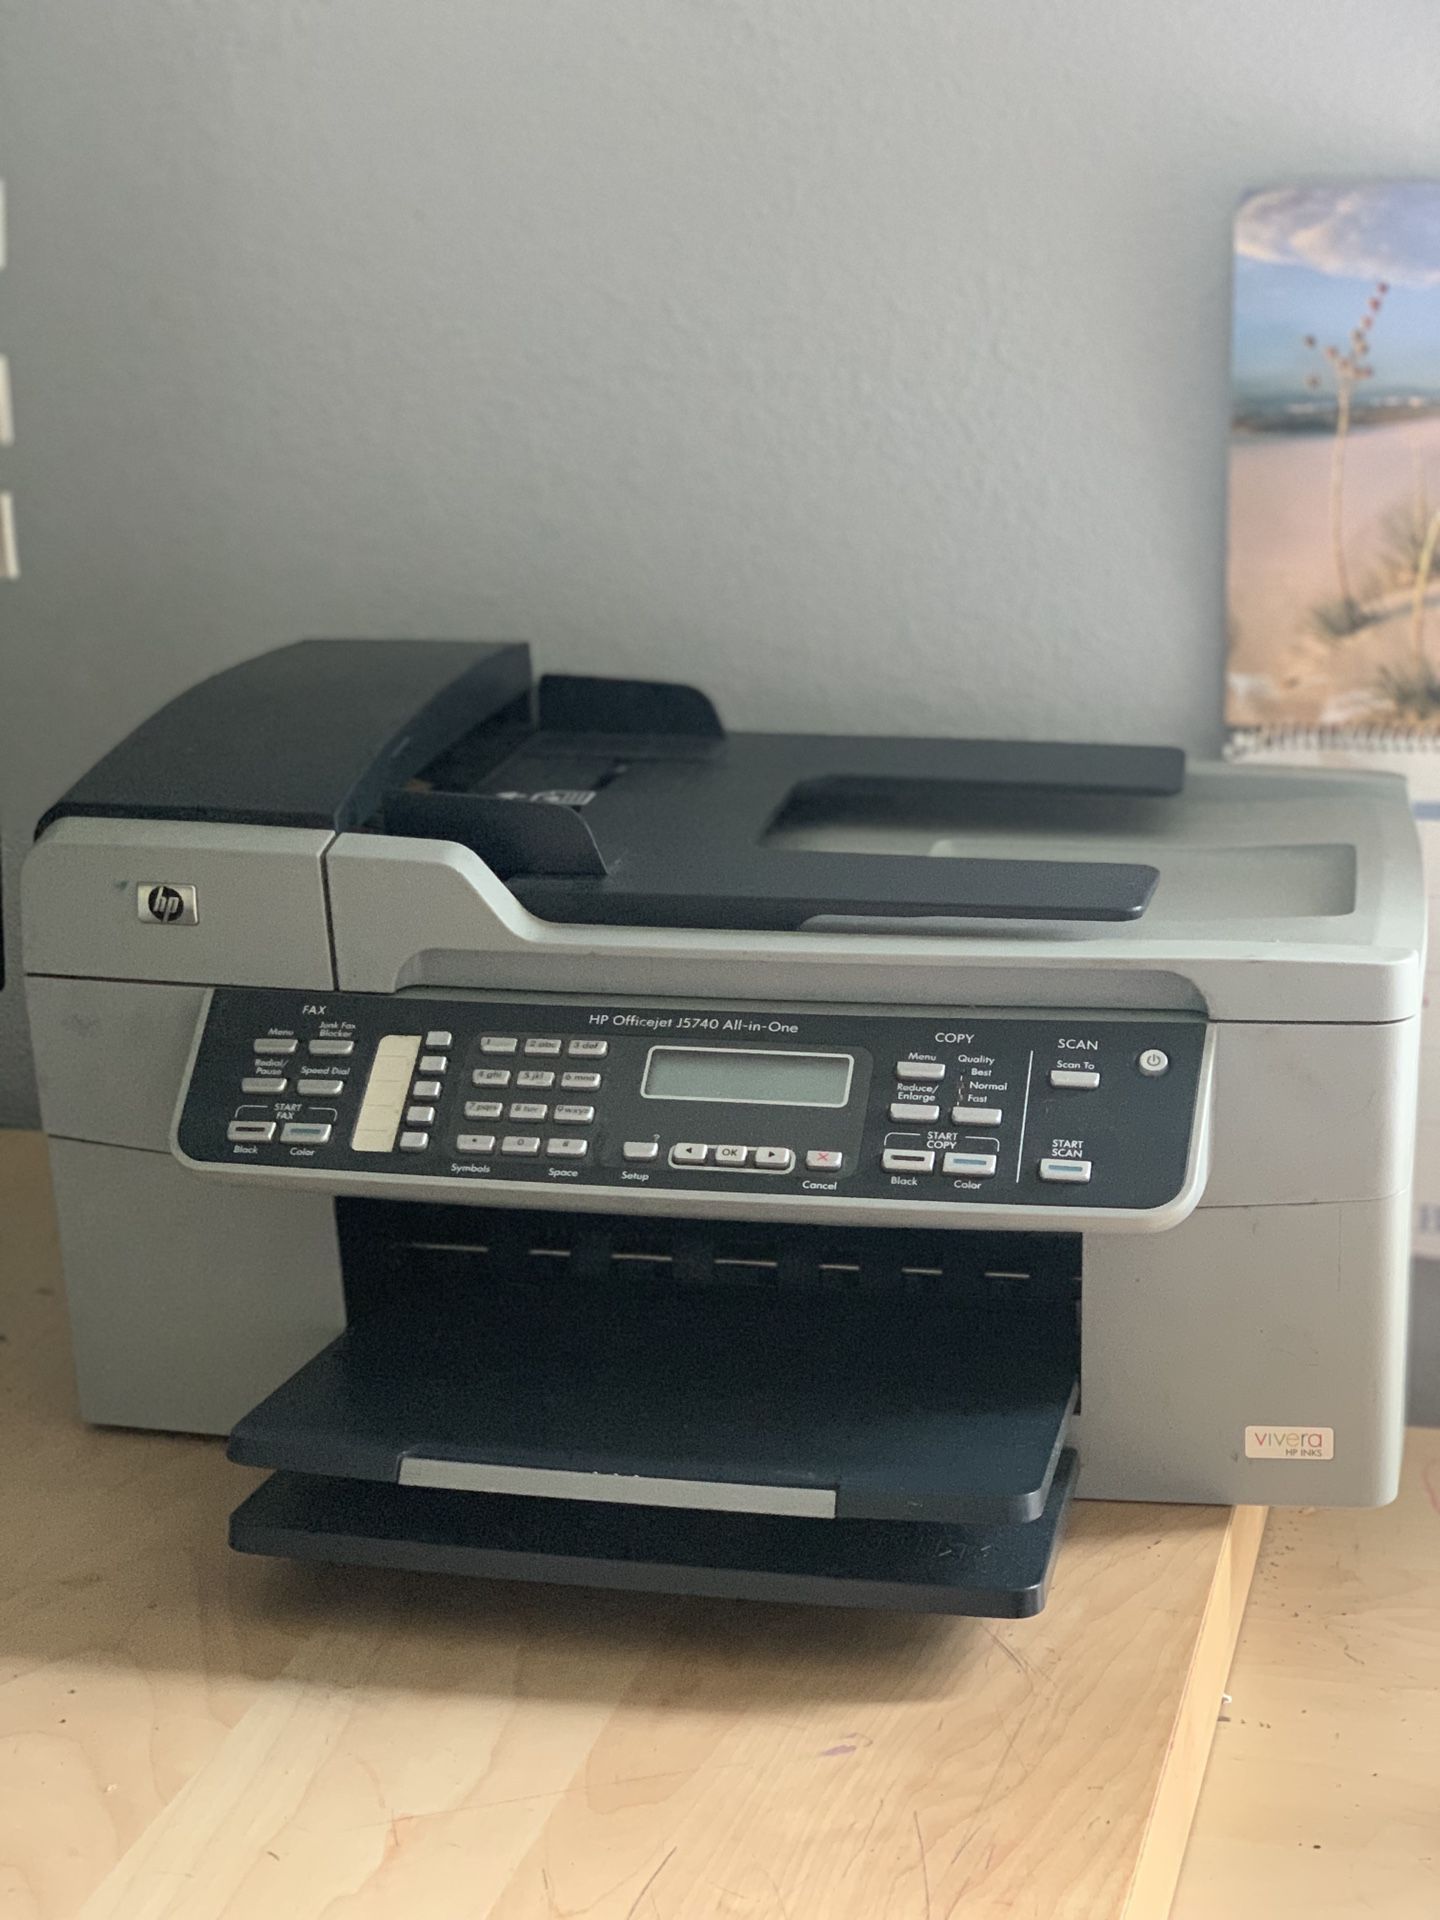 Hp officejet j5740 all-in-one copy, scanner, fax, printer